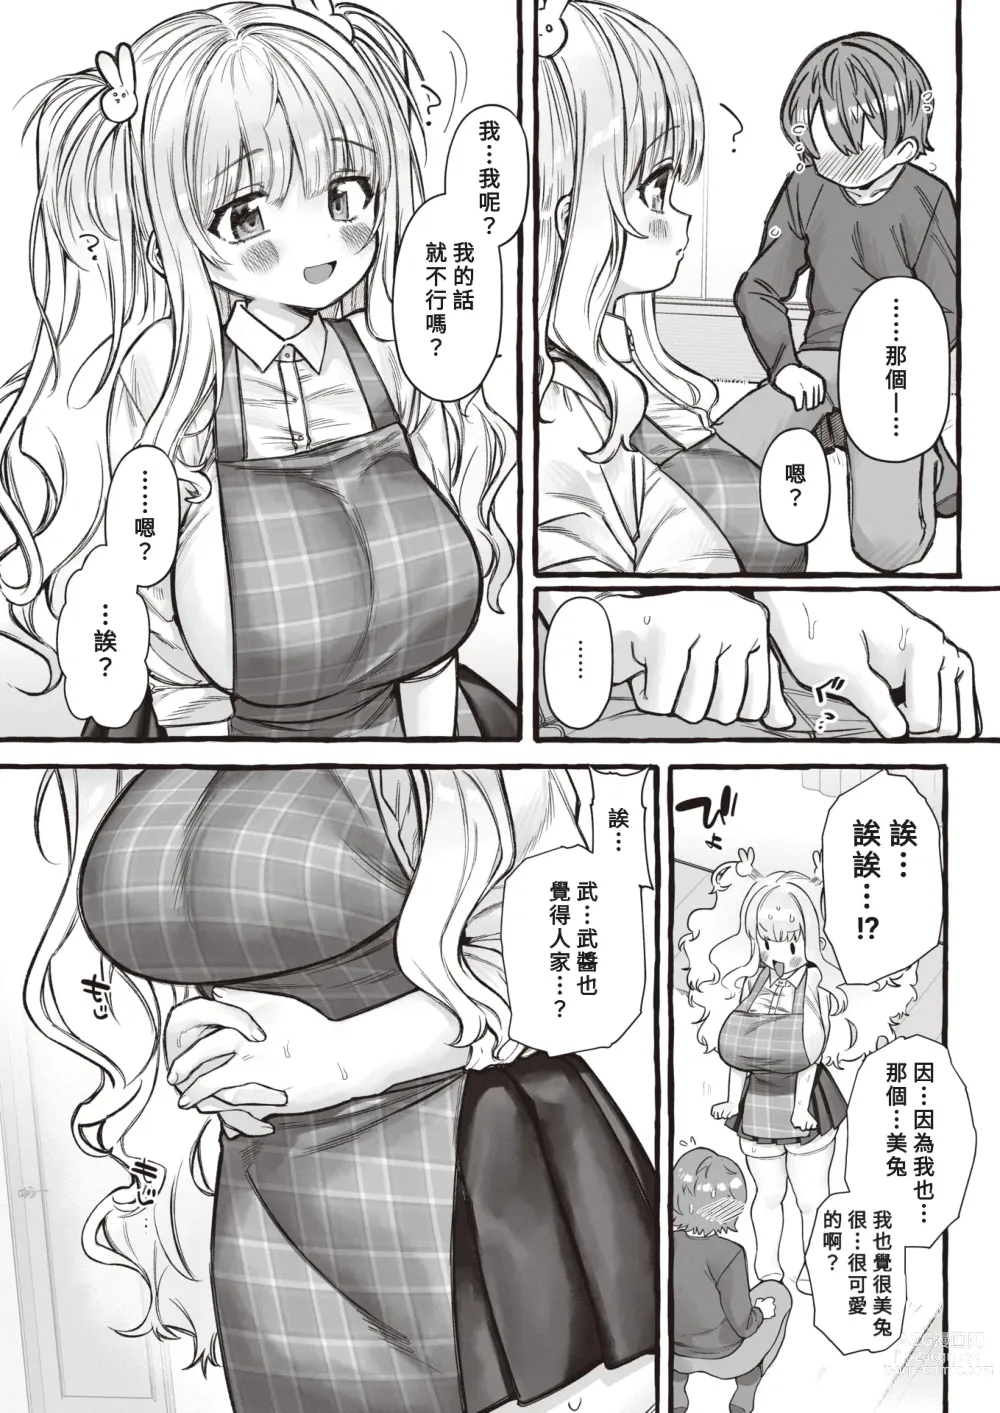 Page 5 of manga ZOO-Kei Joshi@Usagi